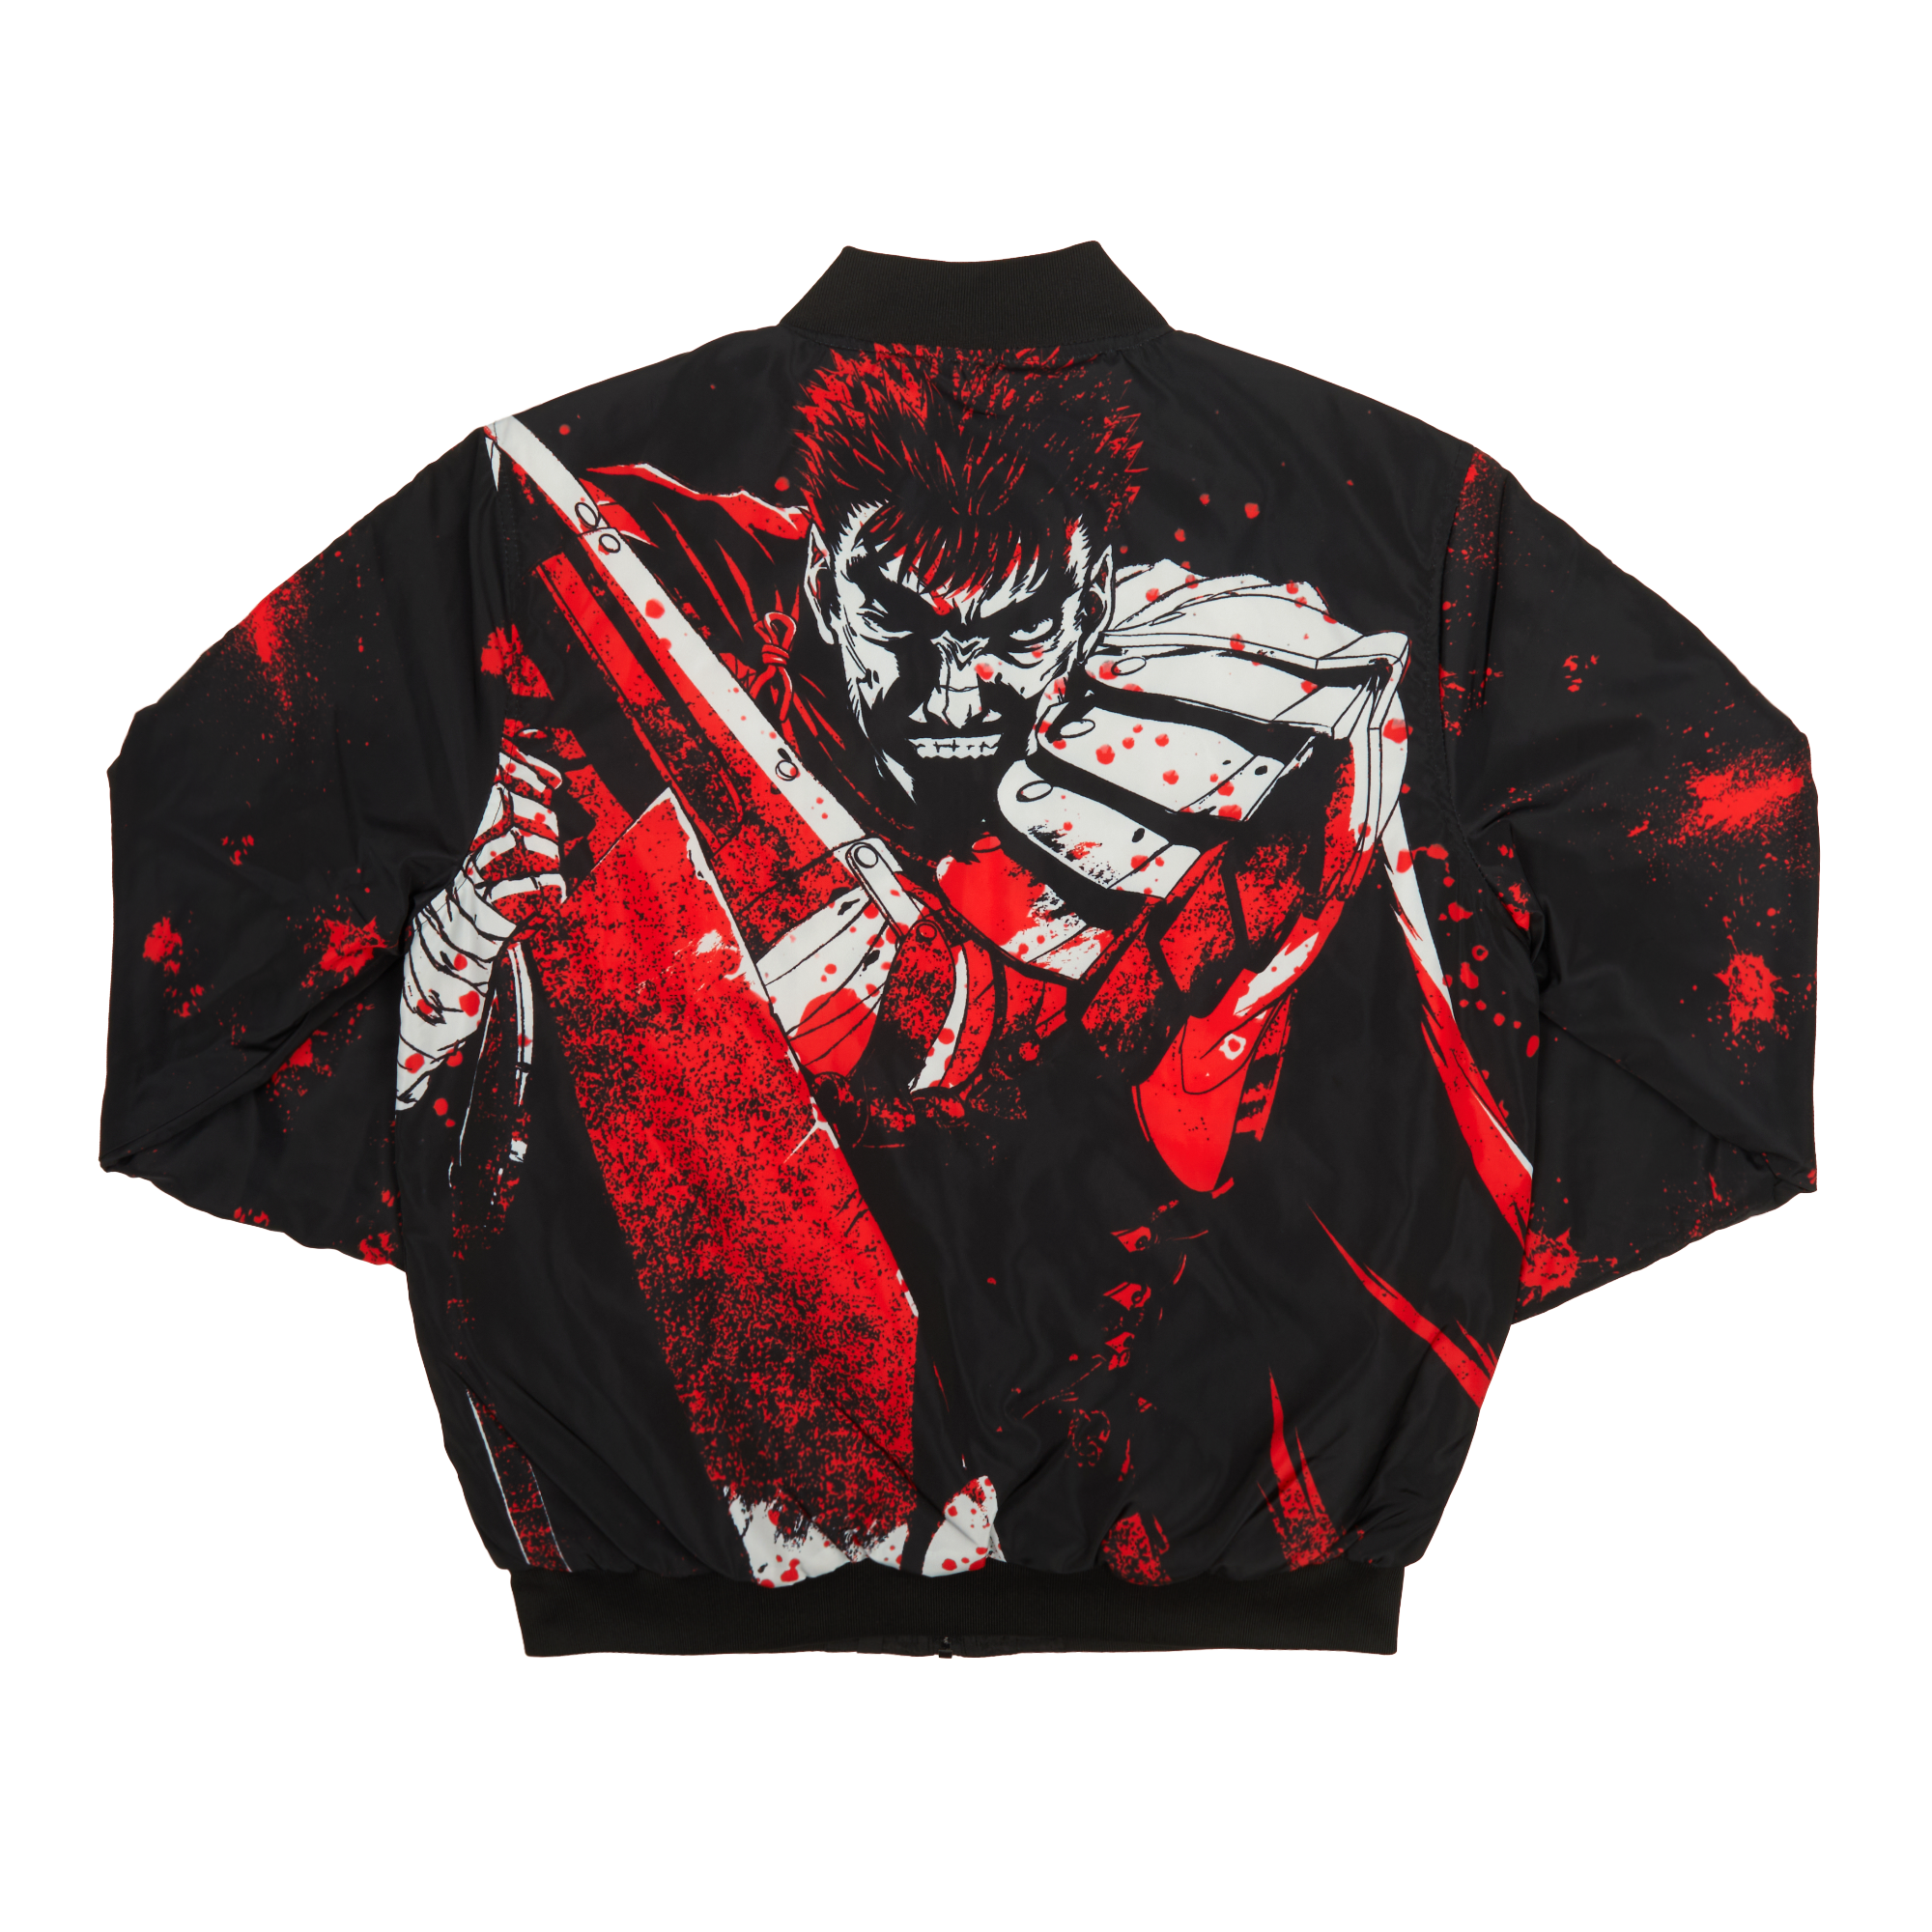 Berserk Gets Officially Licensed Brand of Sacrifice Reversible Bomber Jacket Release